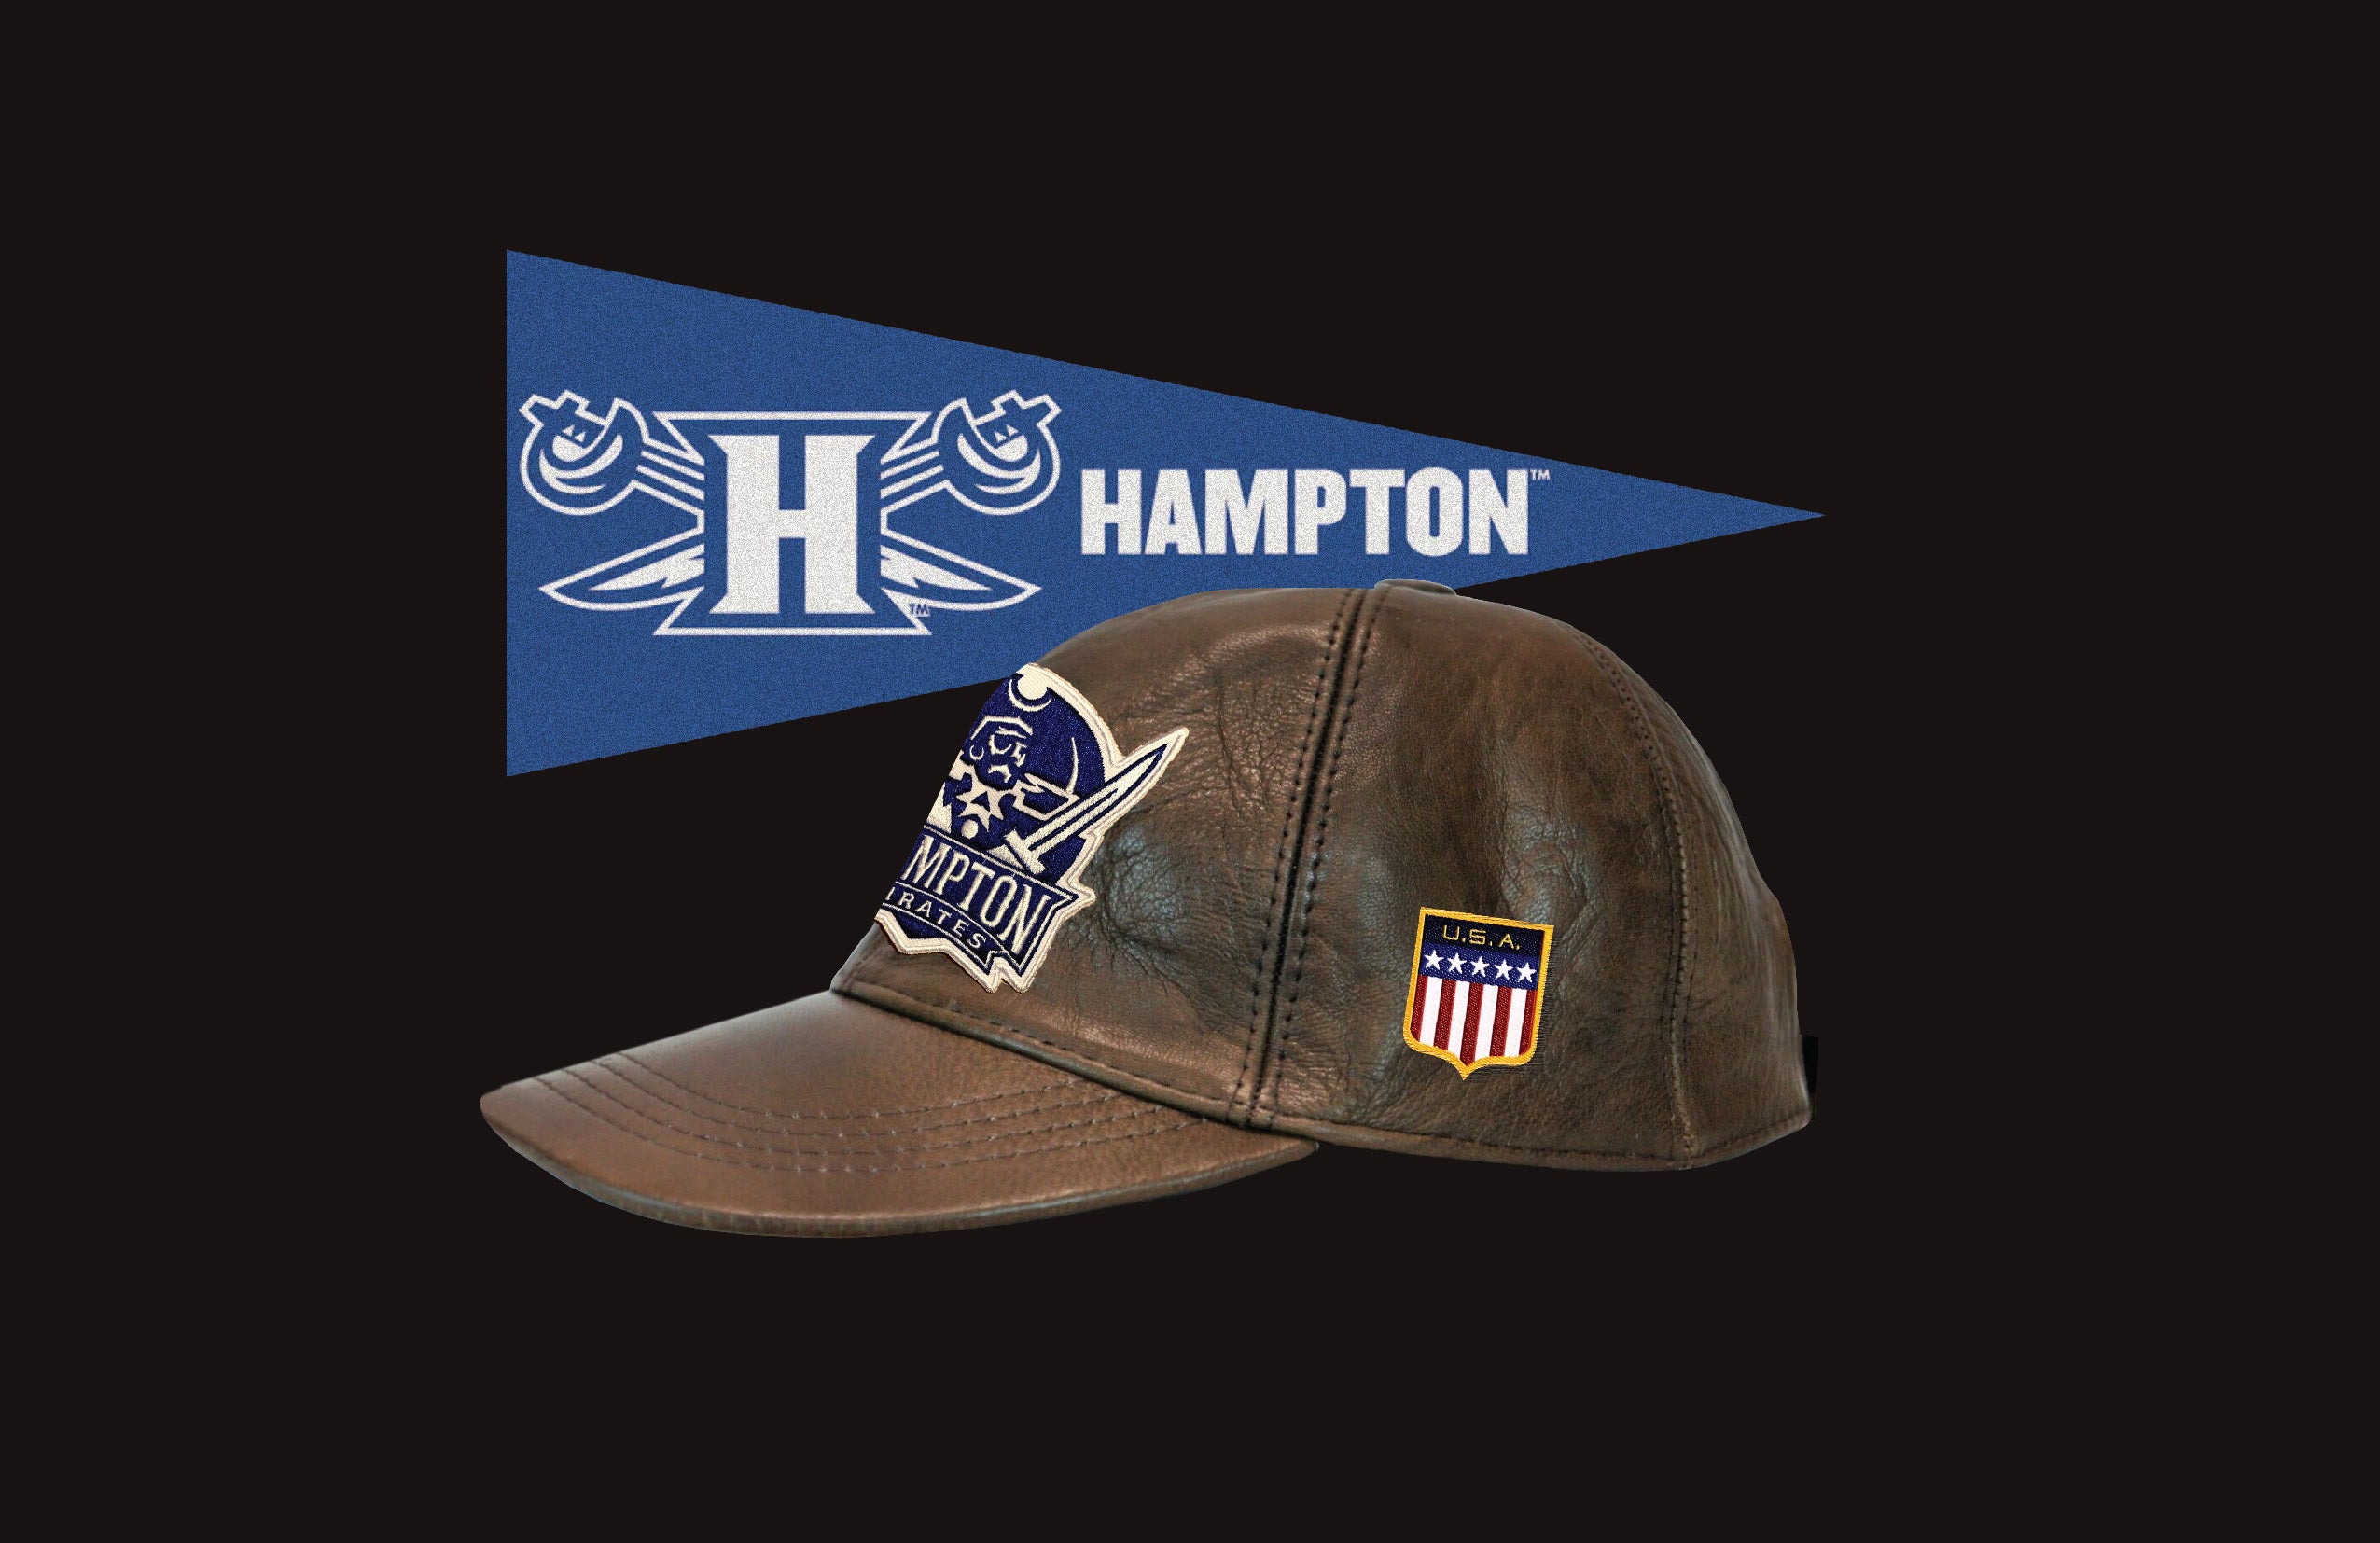 Genuine Leather HBCU Patch Cap - Hampton